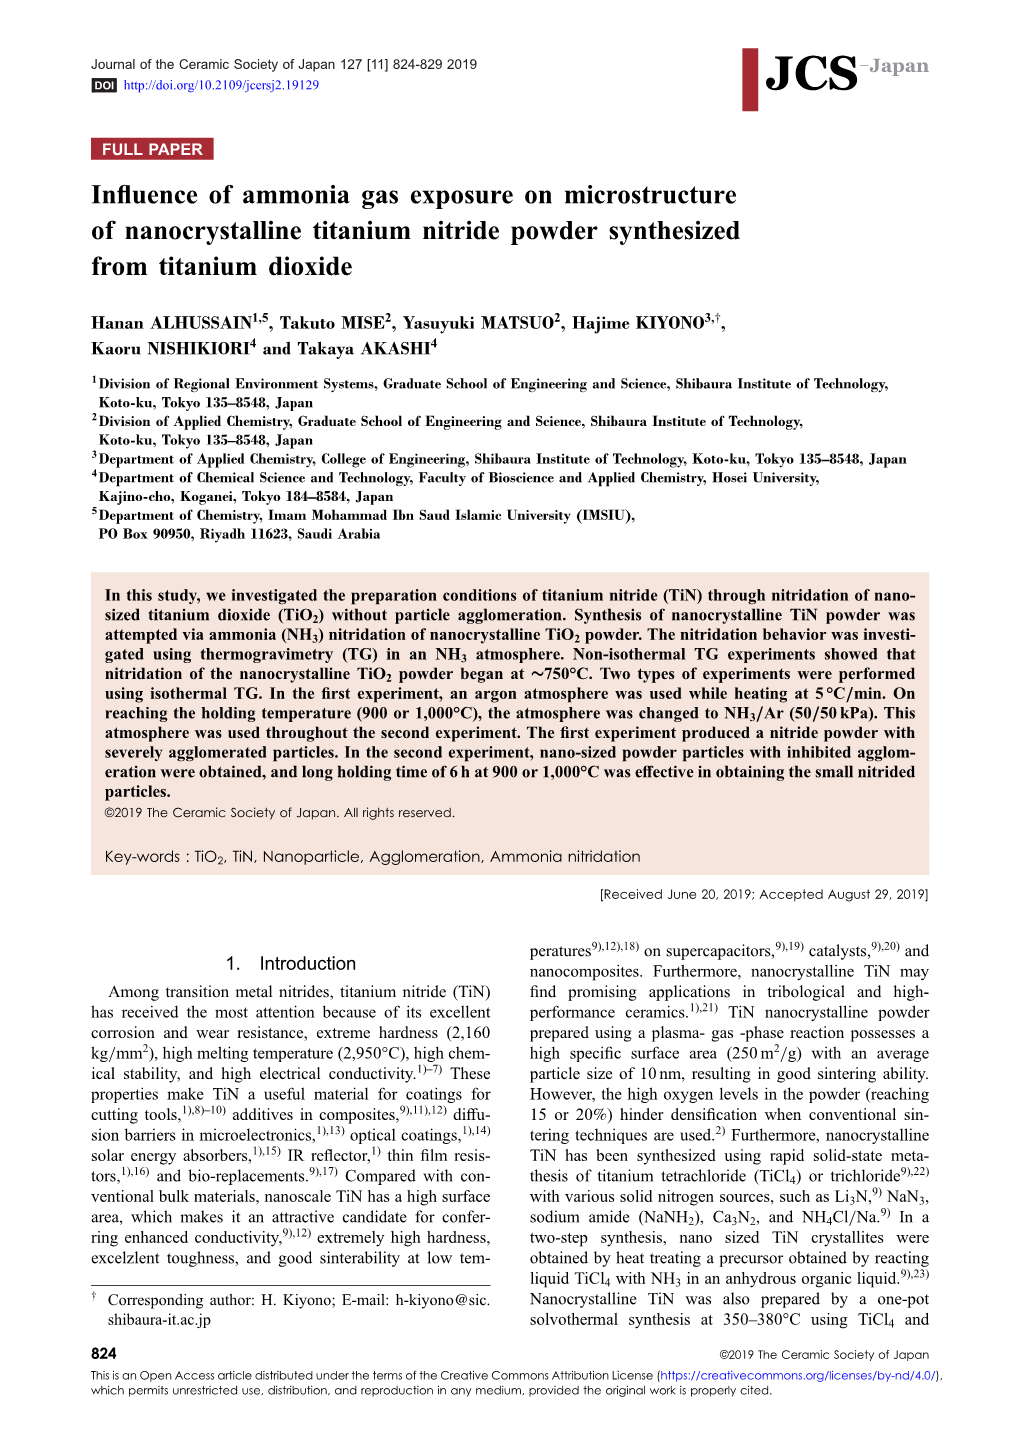 Influence of Ammonia Gas Exposure on Microstructure of Nanocrystalline